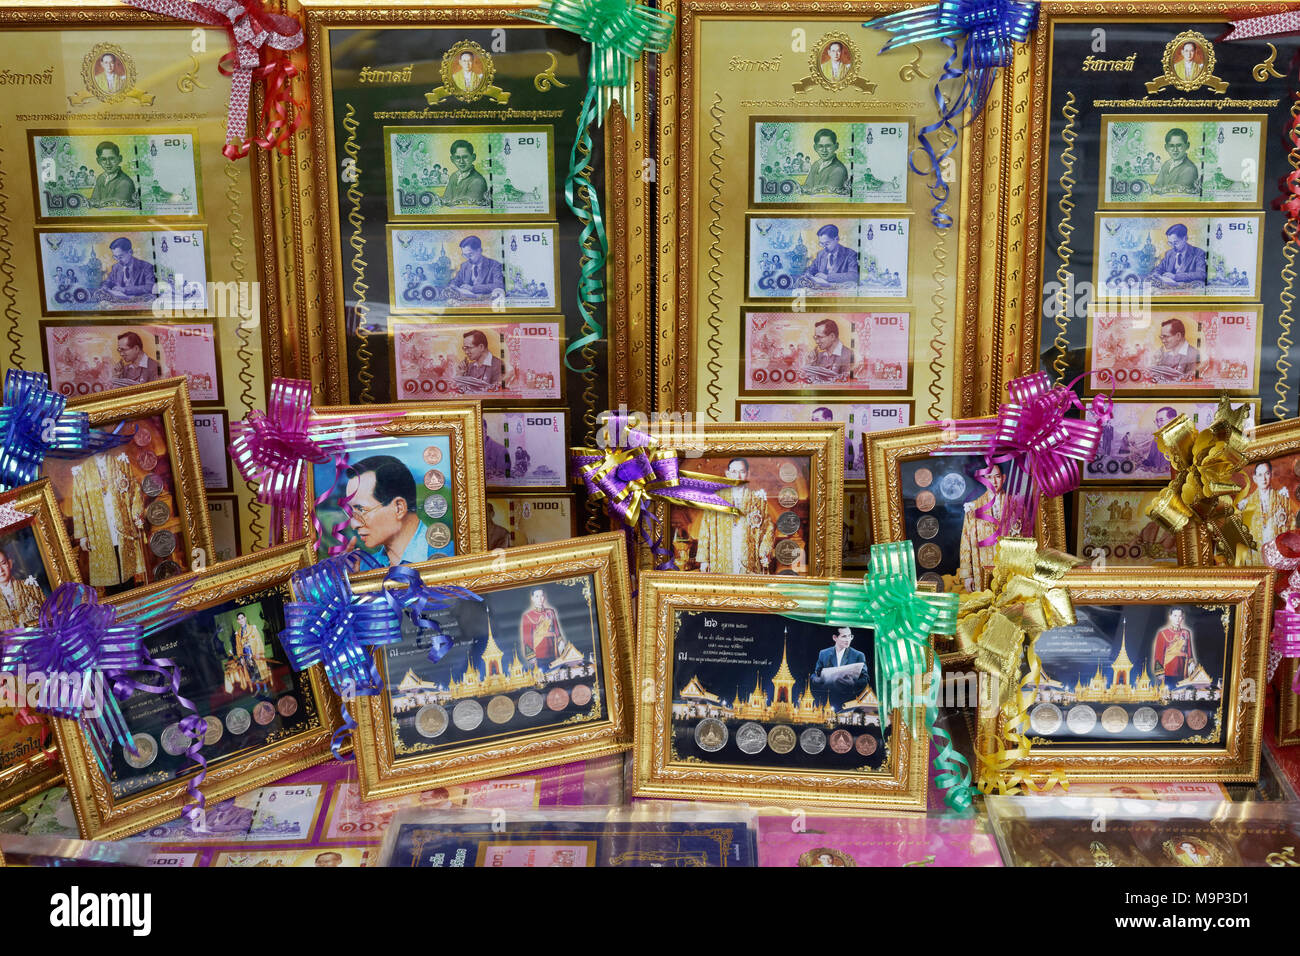 Former King Bhumibol Adulyadej on banknotes and coins, souvenirs in gold frame, Bangkok, Thailand Stock Photo